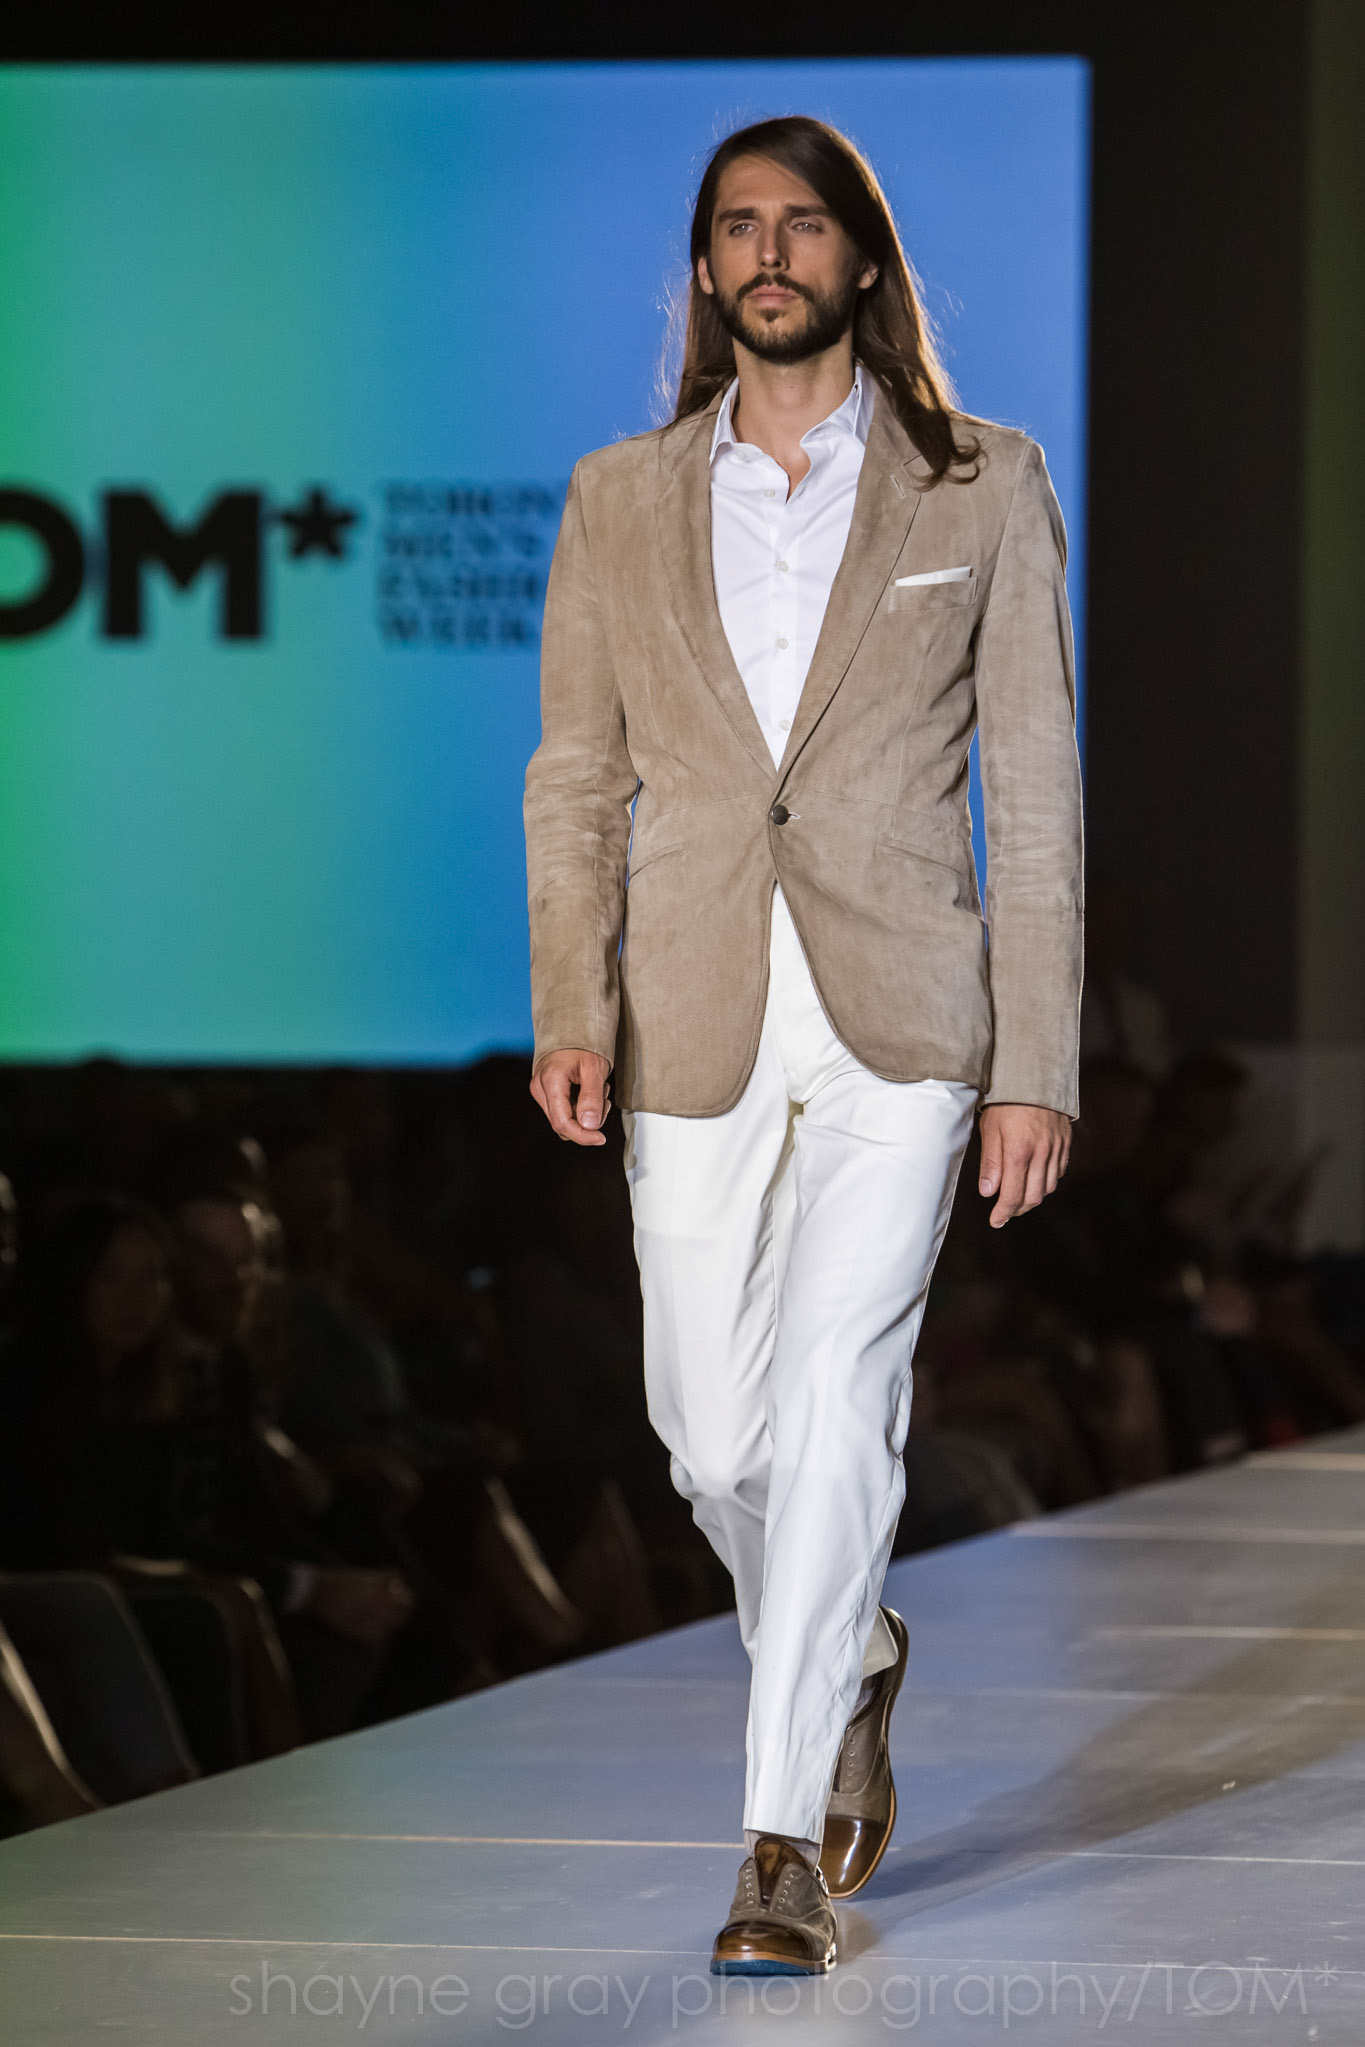 Shayne-Gray-Toronto-men's-fashion_week-TOM-christopher-bates-7205.jpg